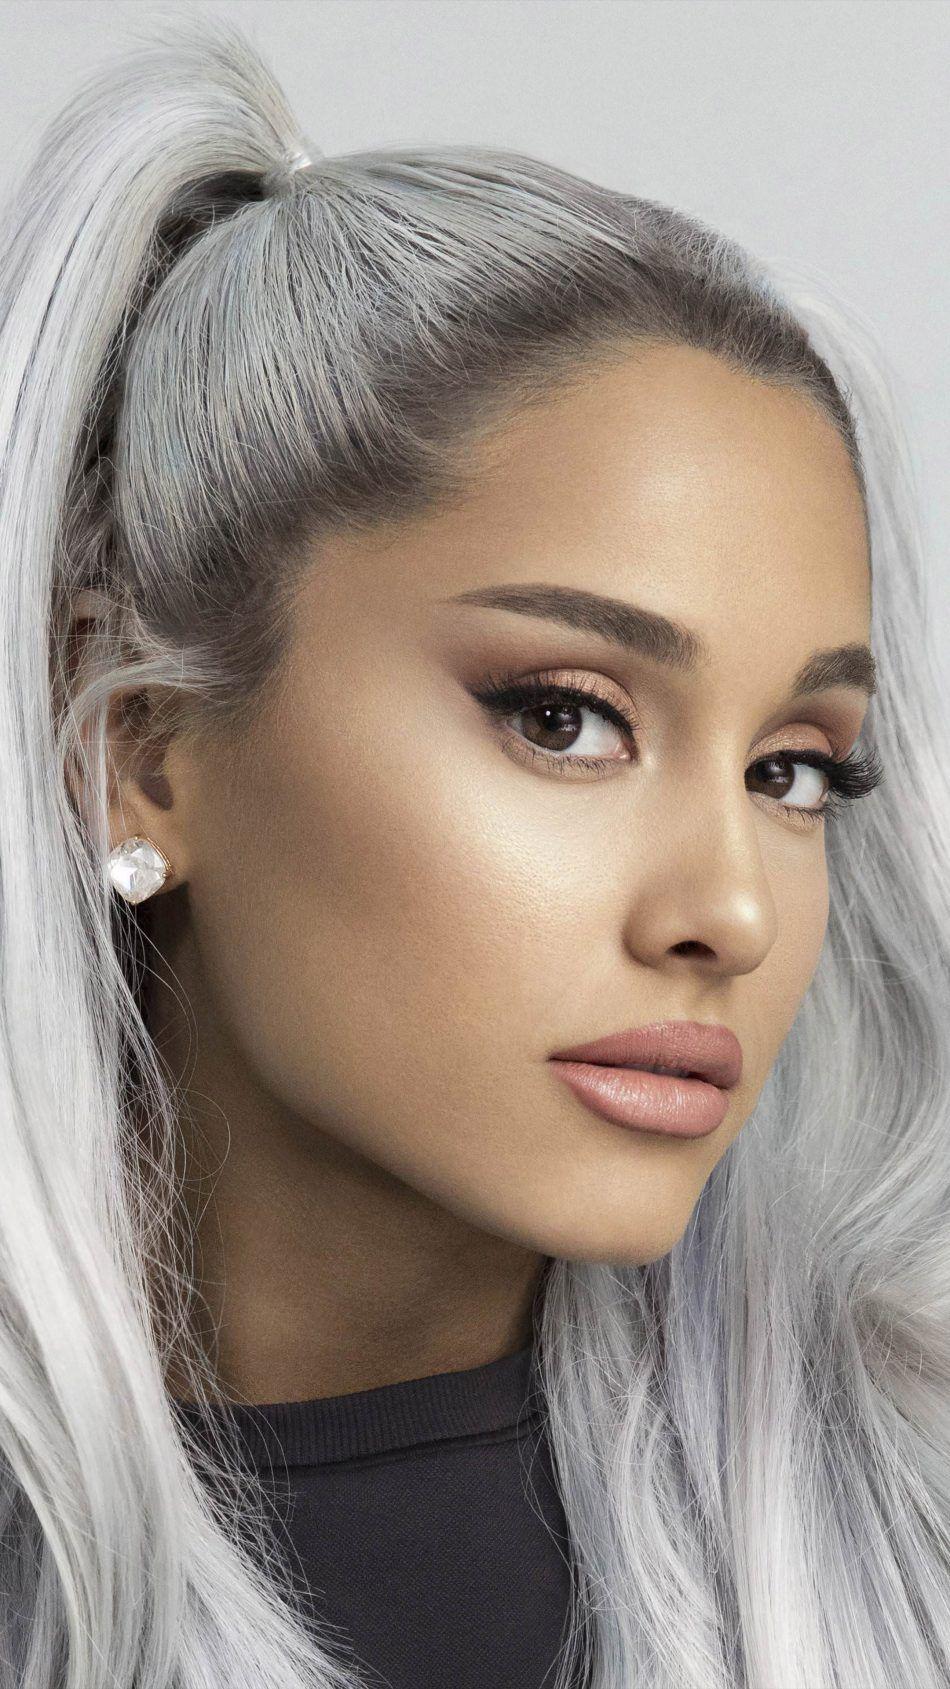 Singer Song Writer Ariana Grande 4K Ultra HD Mobile Wallpaper. Ariana Grande Nose, Ariana Grande Makeup, Ariana Grande Photohoot